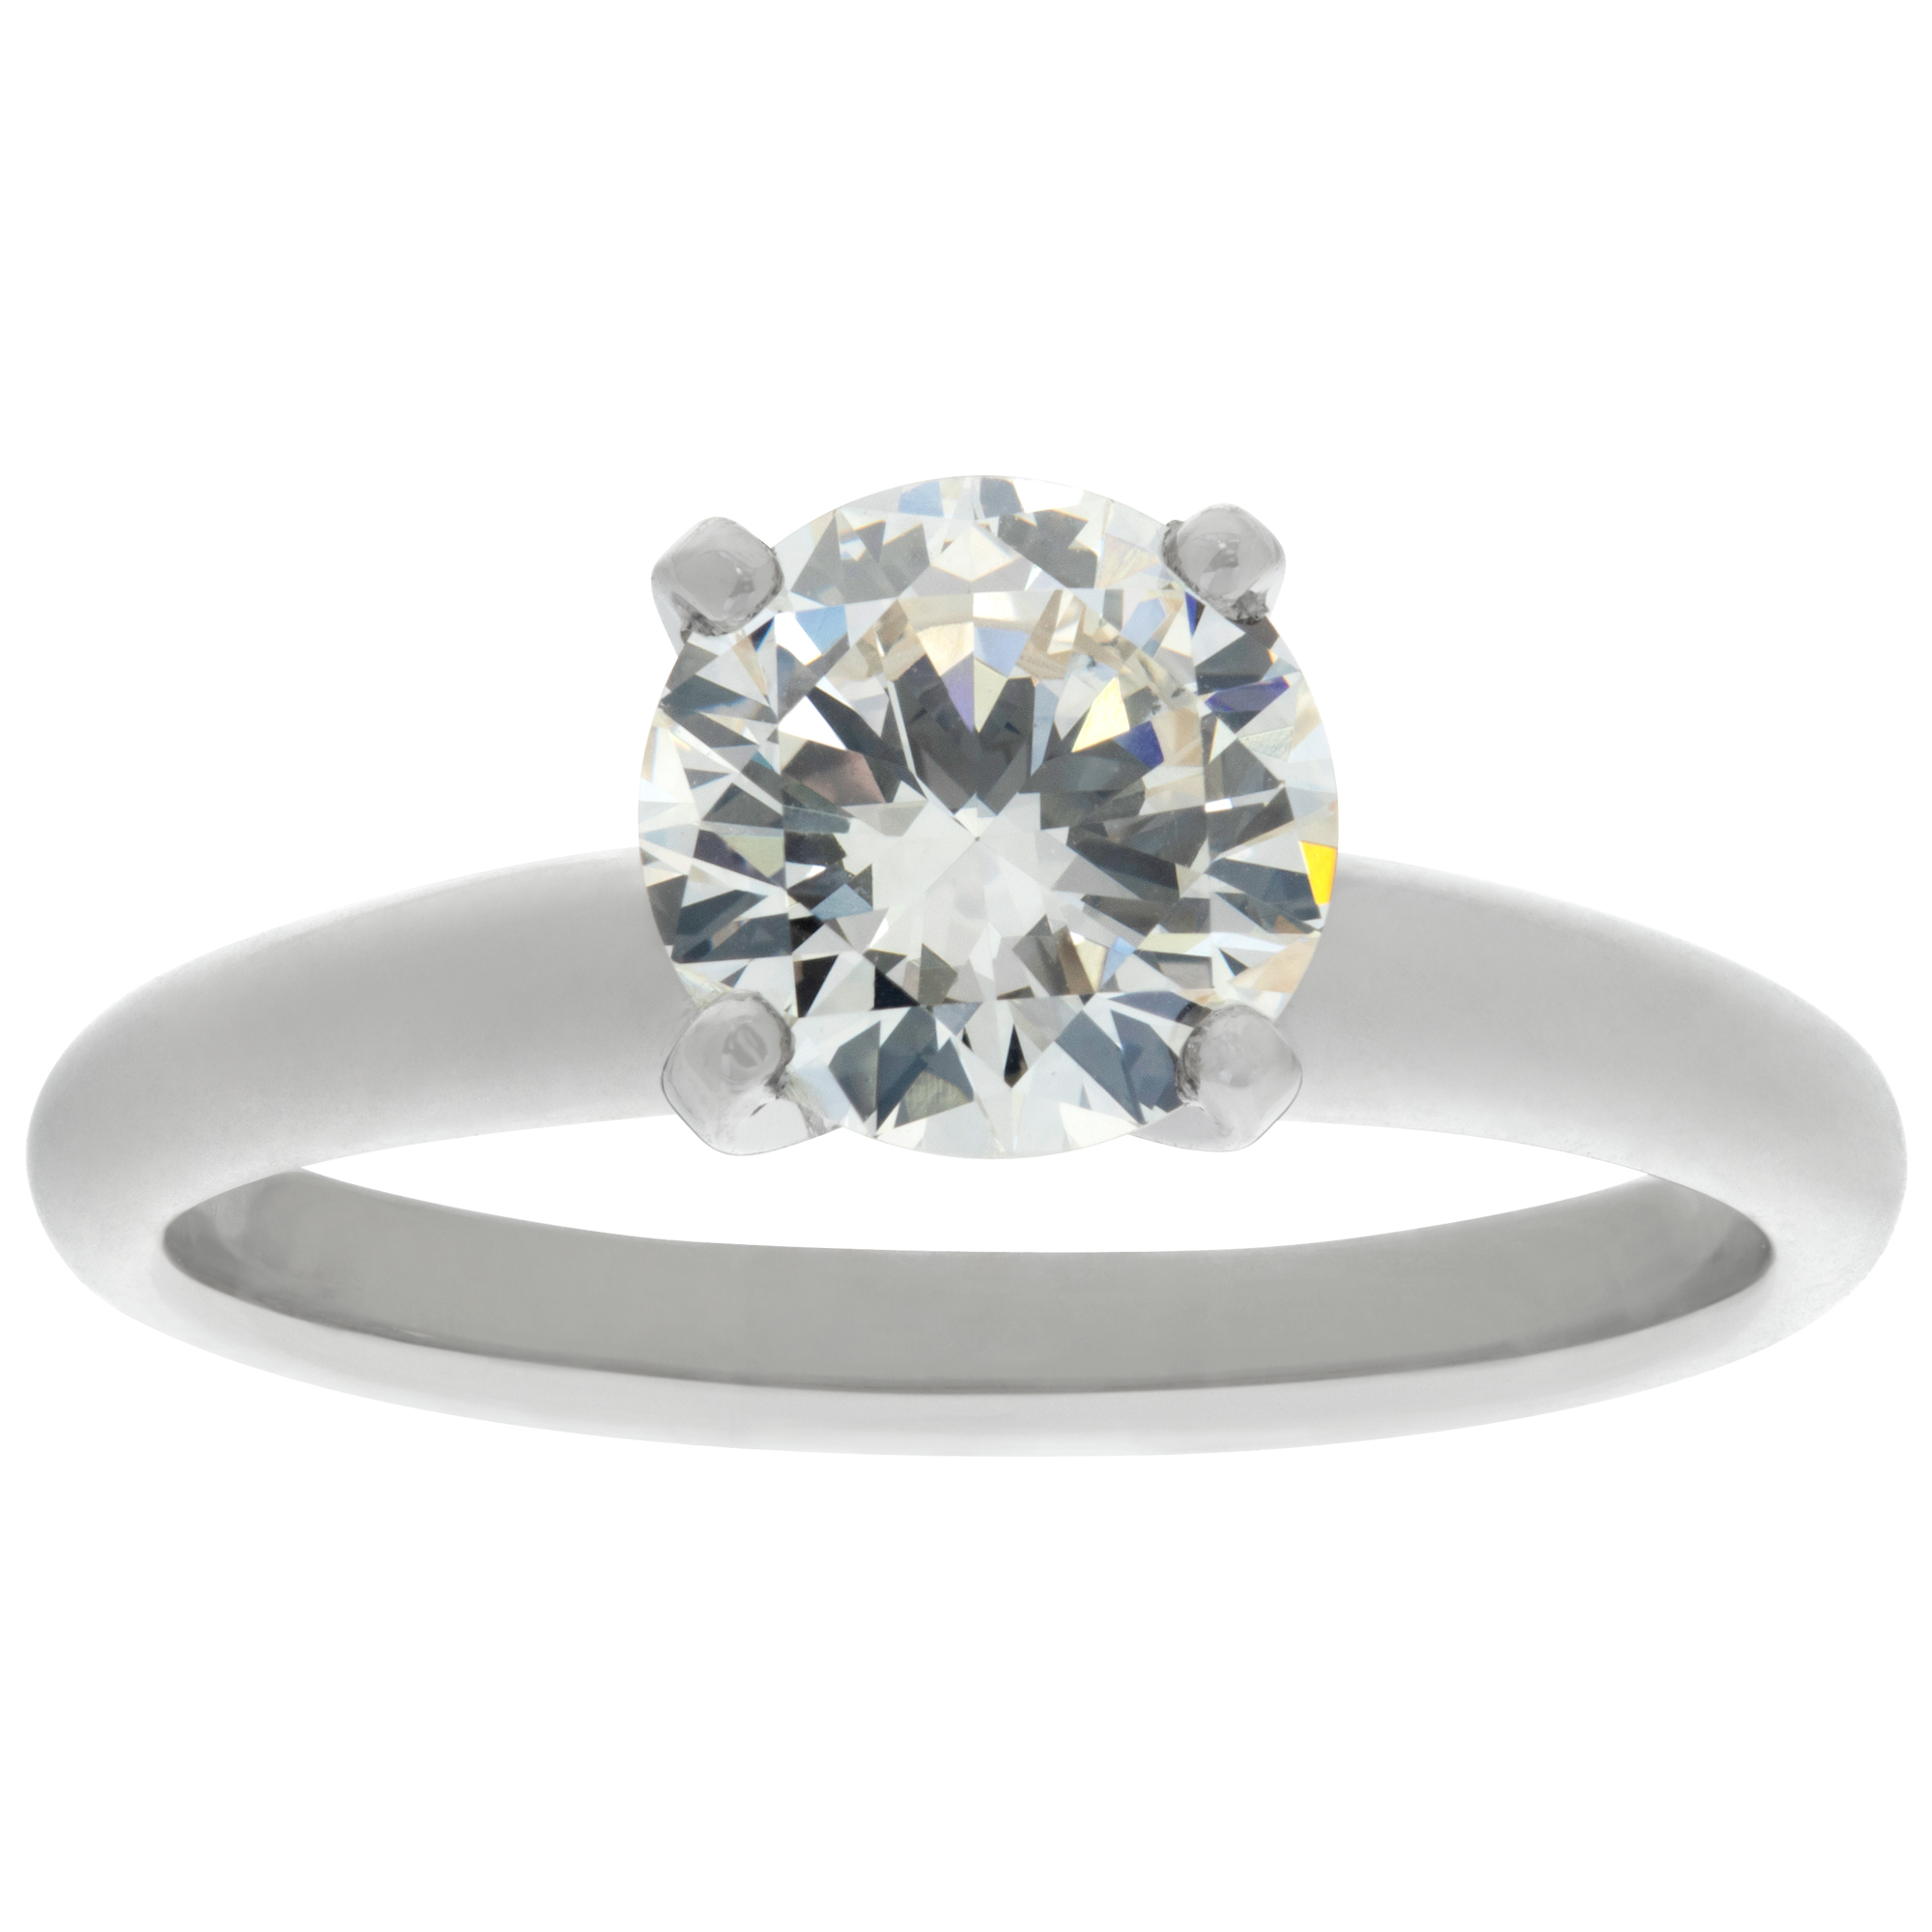 GIA certified round brilliant cut 1.34 carat (K color, VVS2 clarity) platinum ring image 1